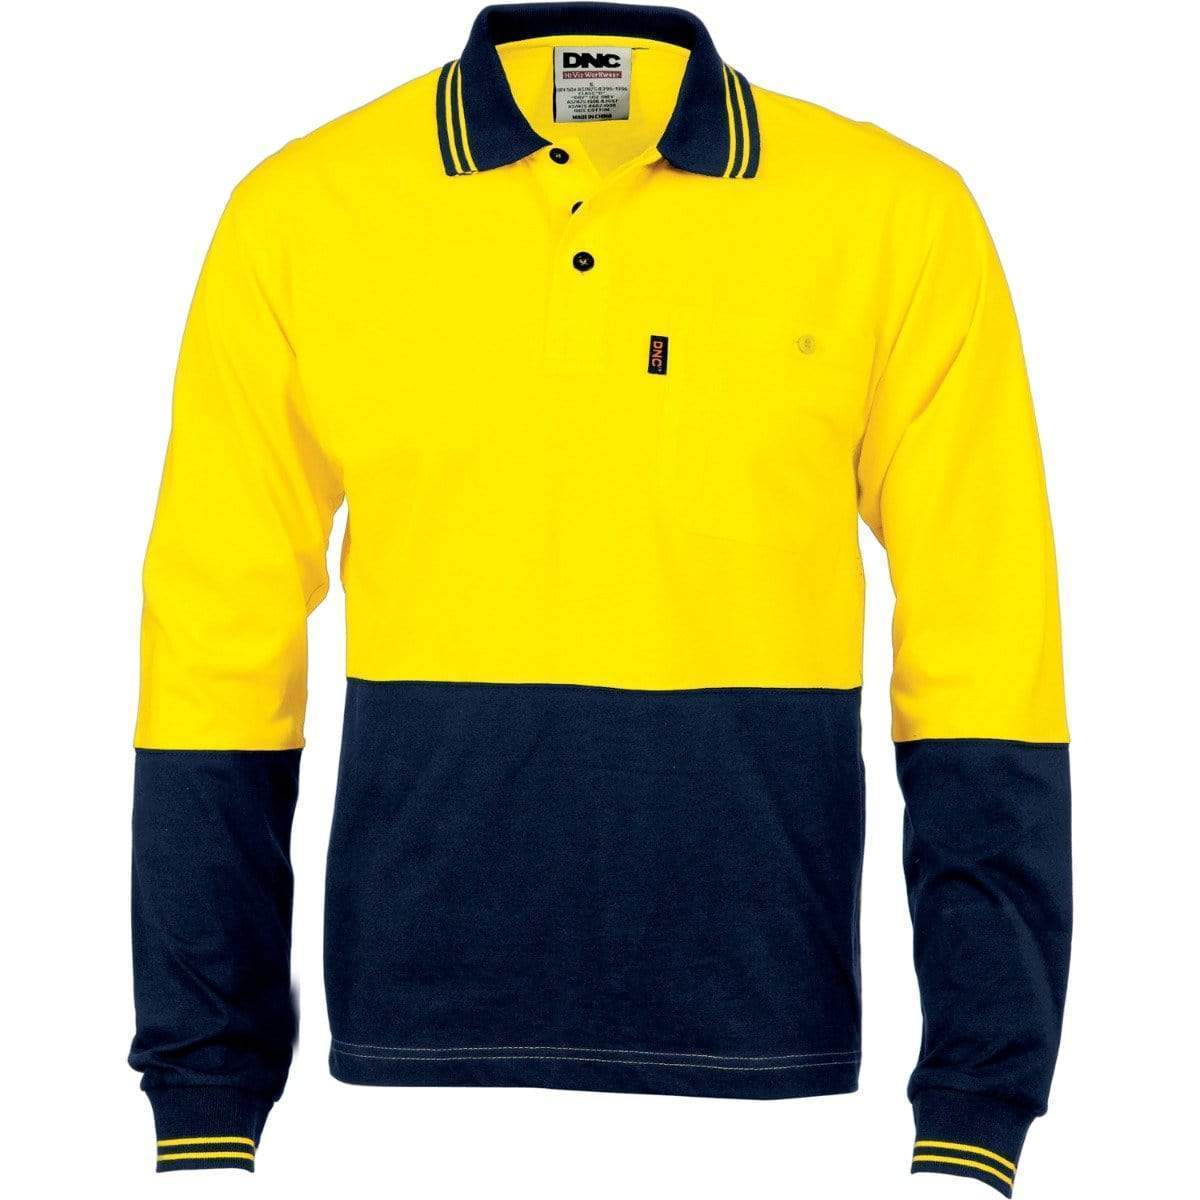 Dnc Workwear Hi-vis Cool-breeze Cotton Jersey Long Sleeve Polo Shirt With Underarm Cotton Mesh - 3846 Work Wear DNC Workwear Yellow/Navy XS 